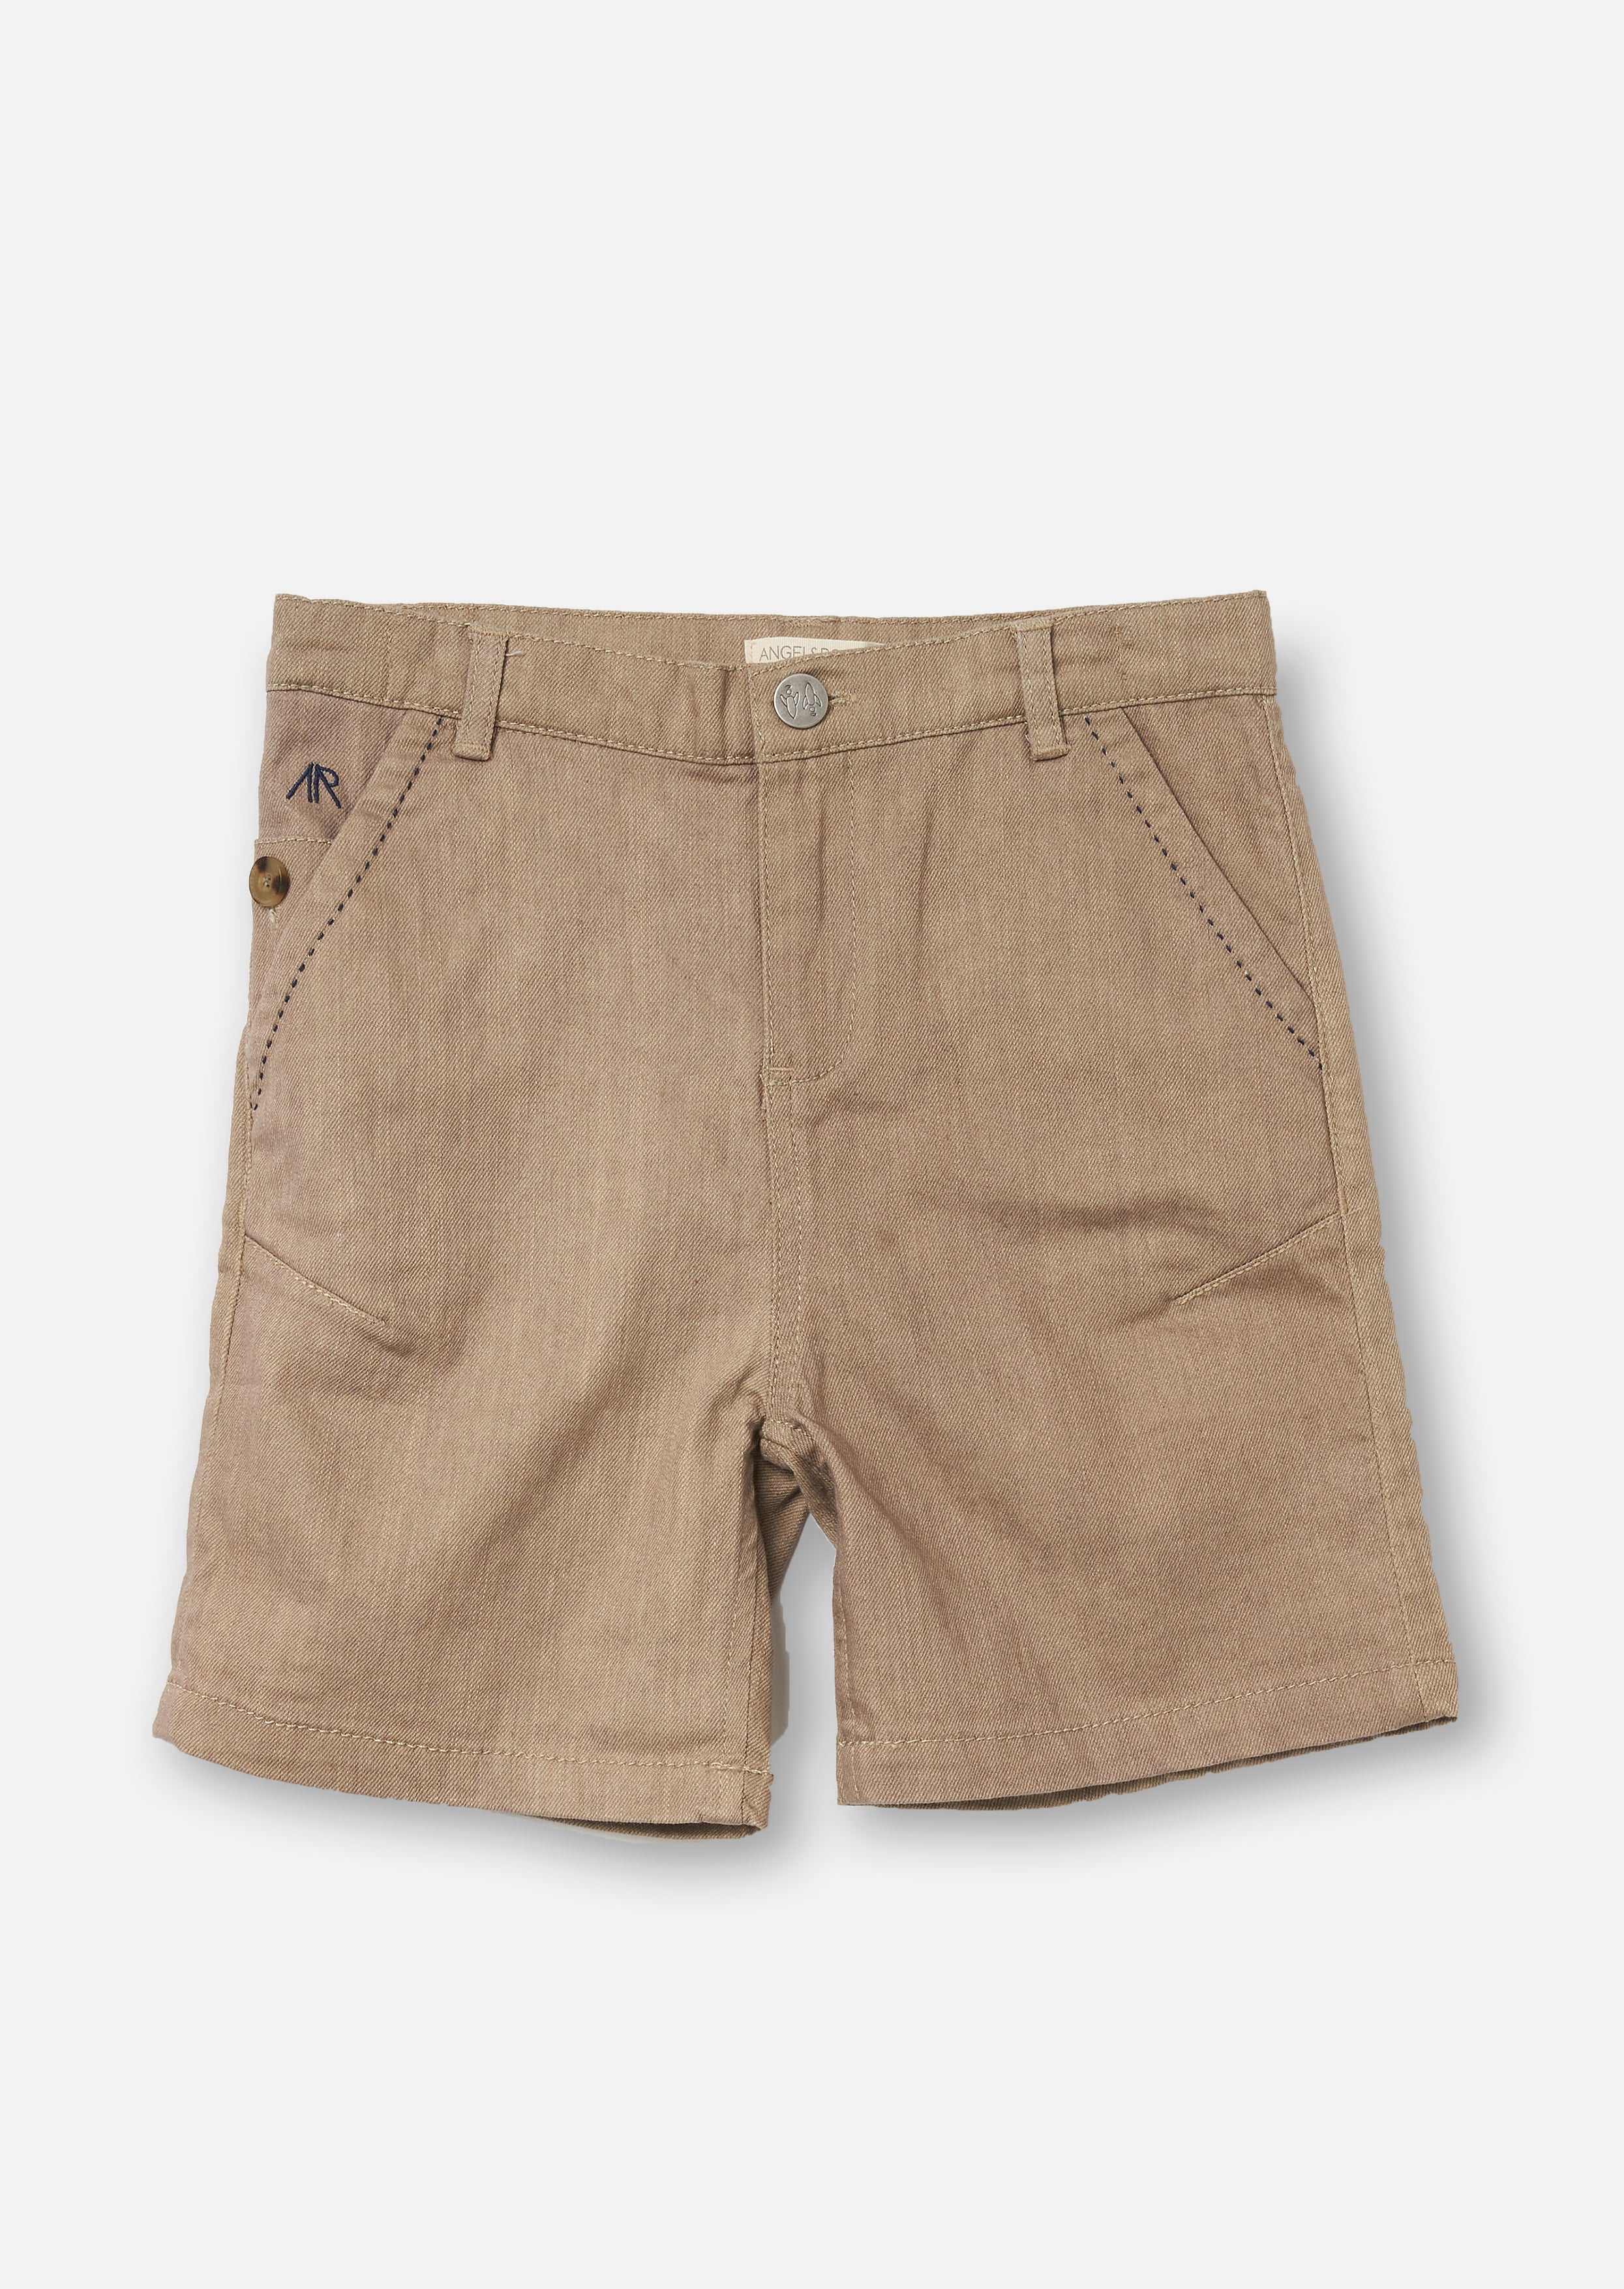 Boys Smart Cotton Brown Shorts